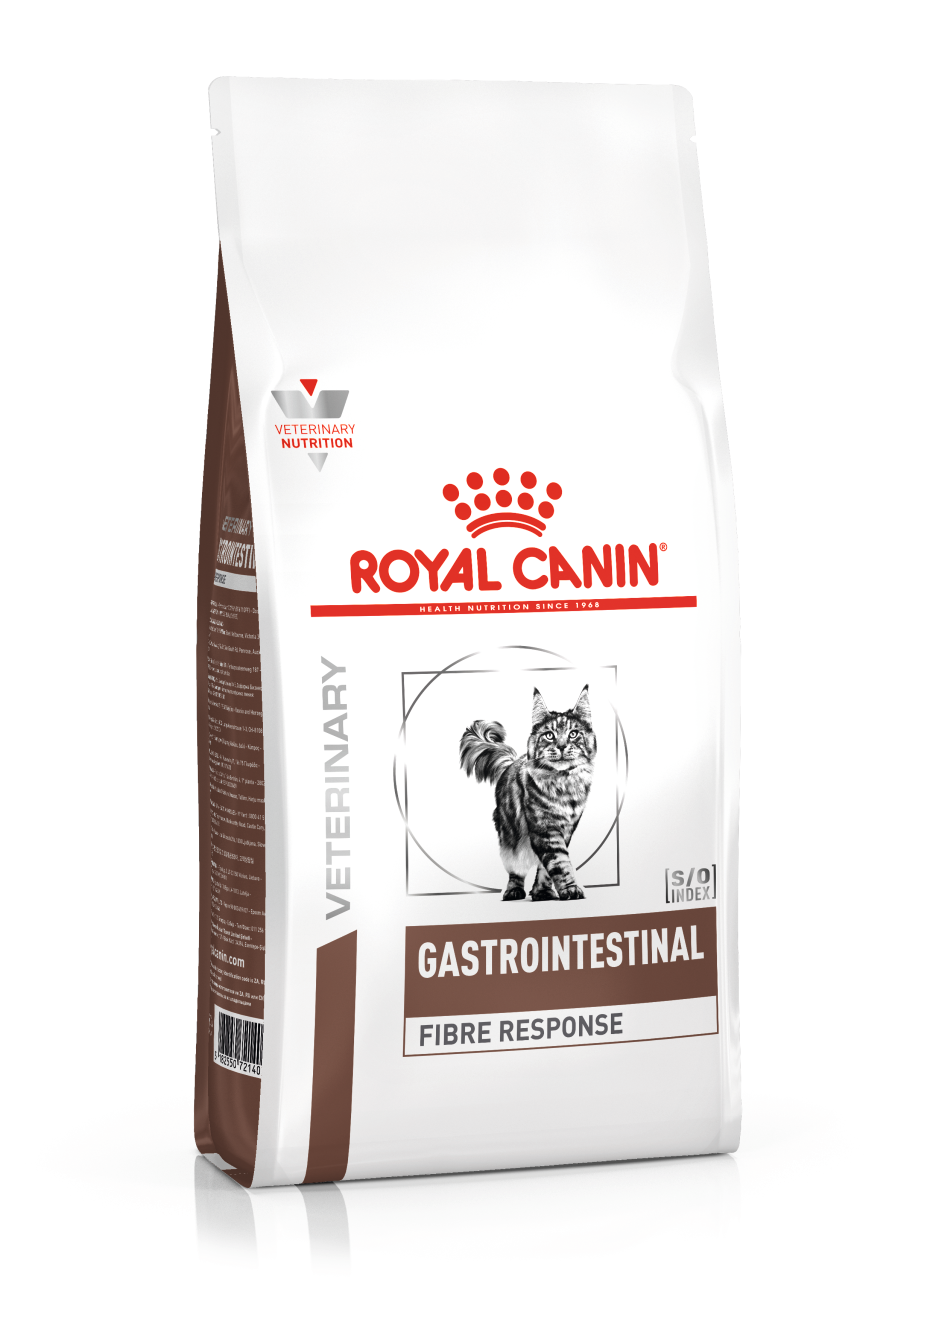 Royal Canin Gastrointestinal (Fibre Response) for Cats